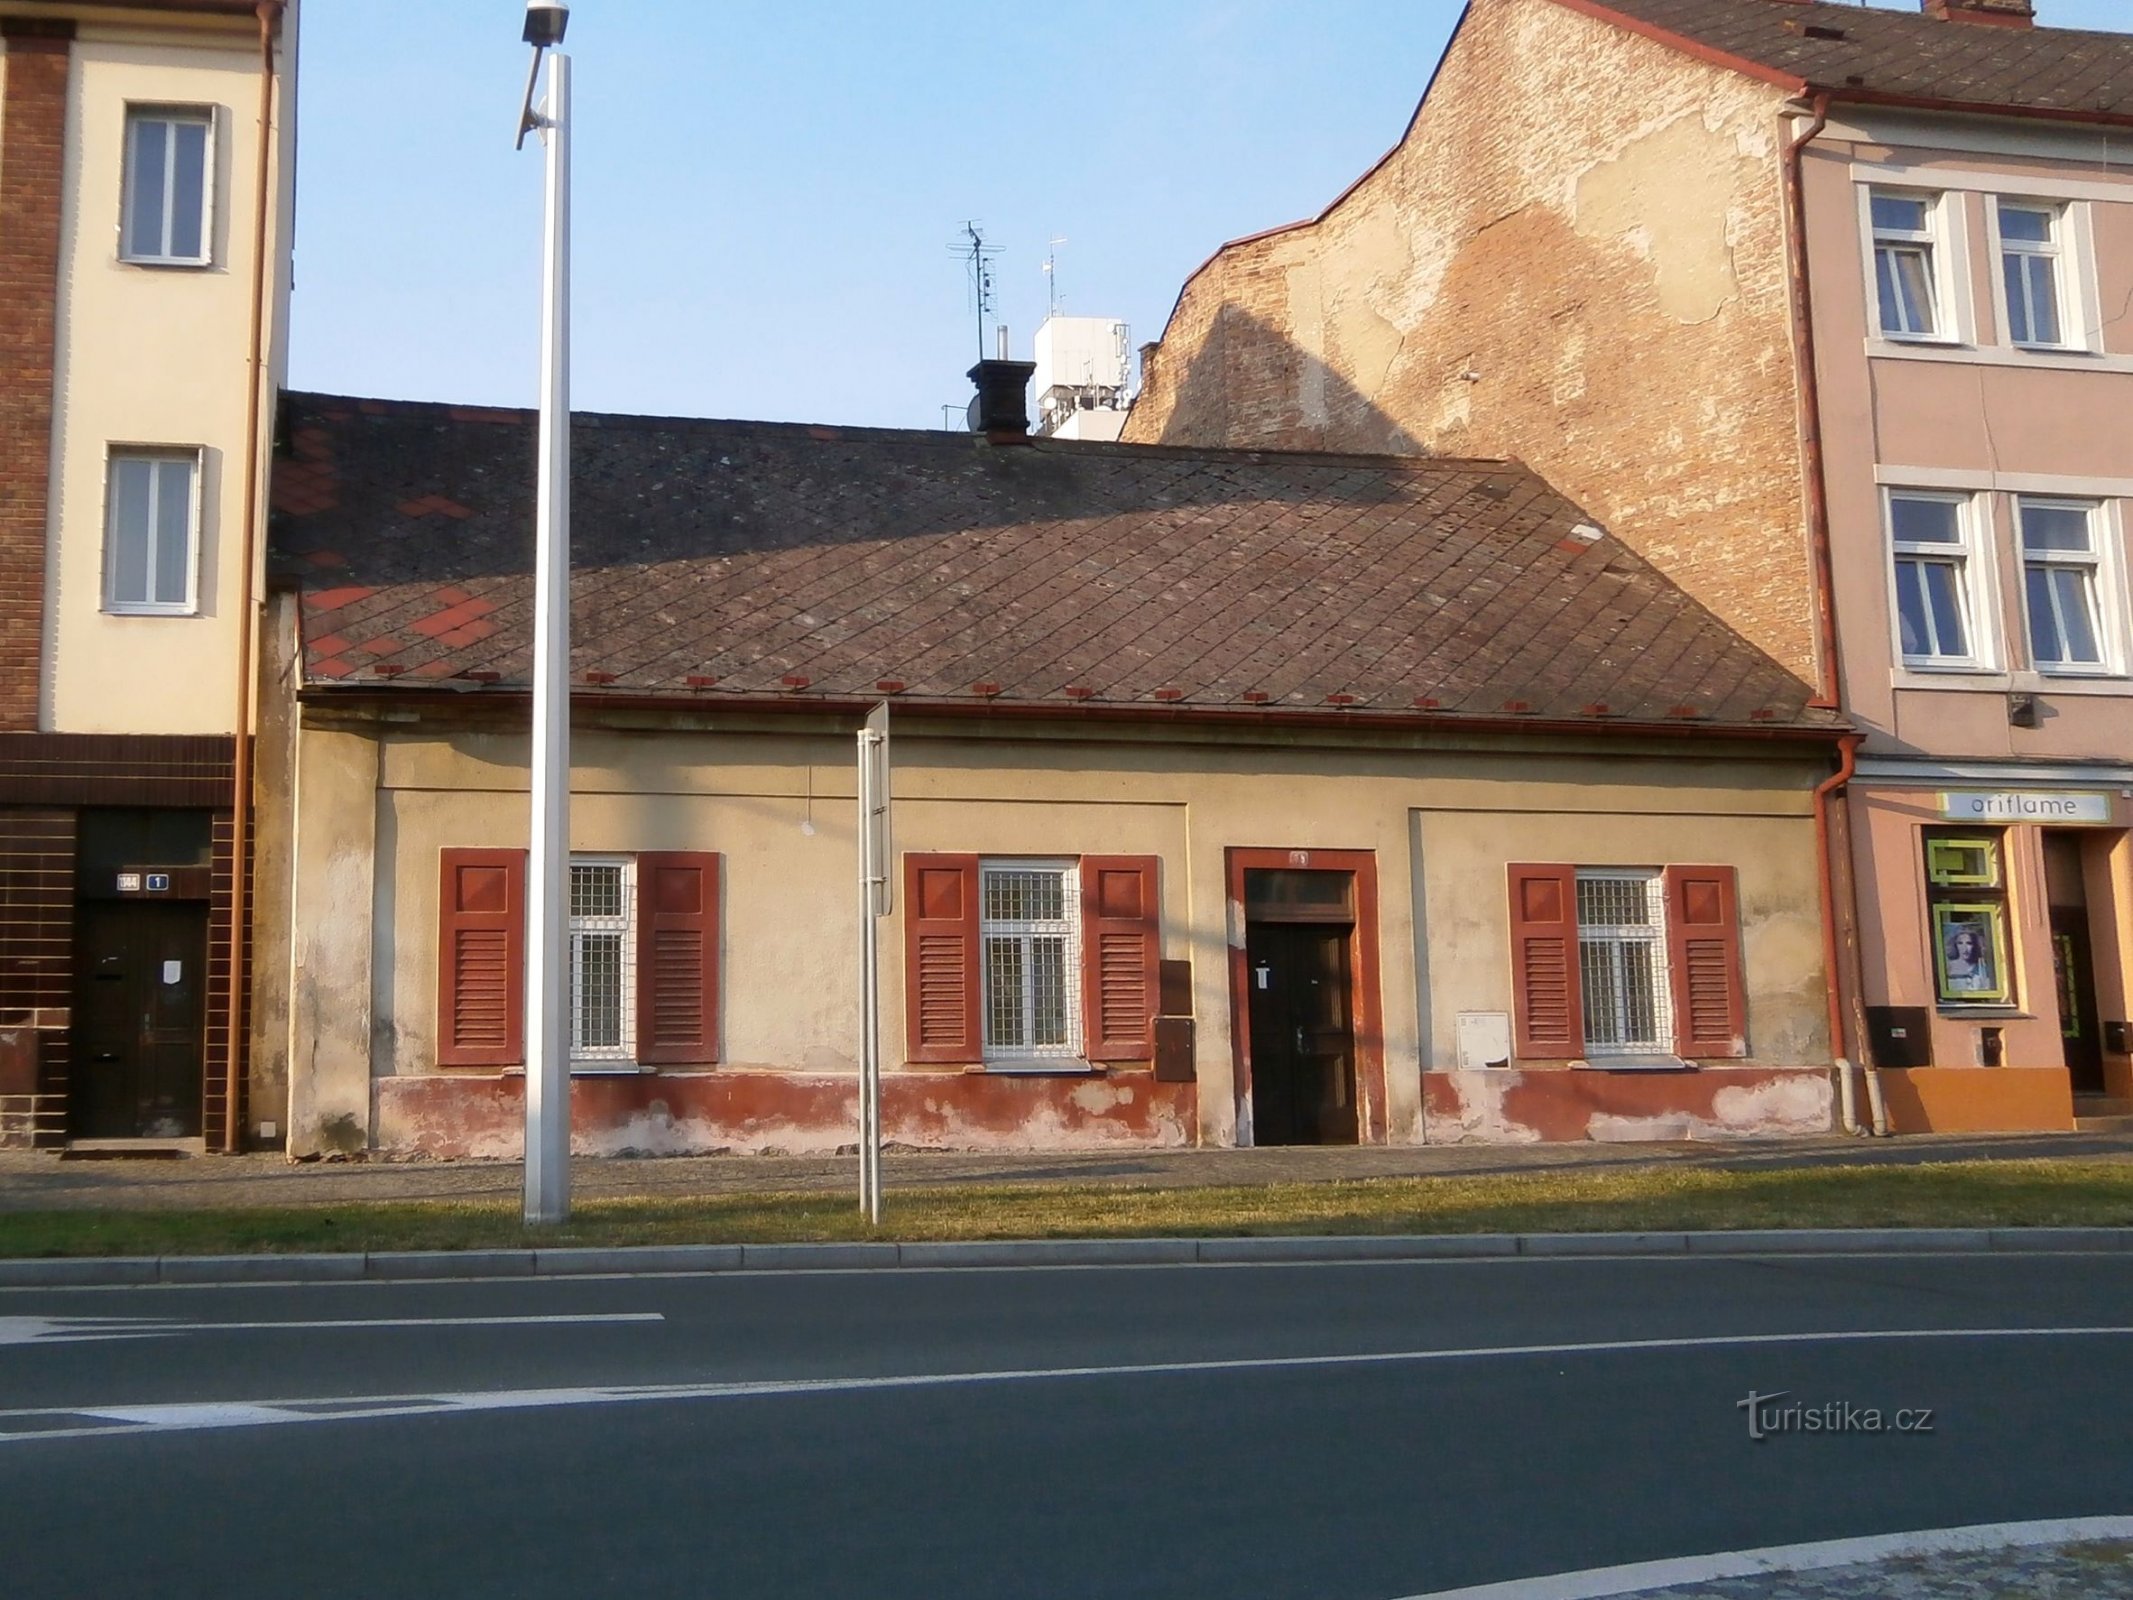 Station nr. 78 (Hradec Králové, 27.7.2014/XNUMX/XNUMX)